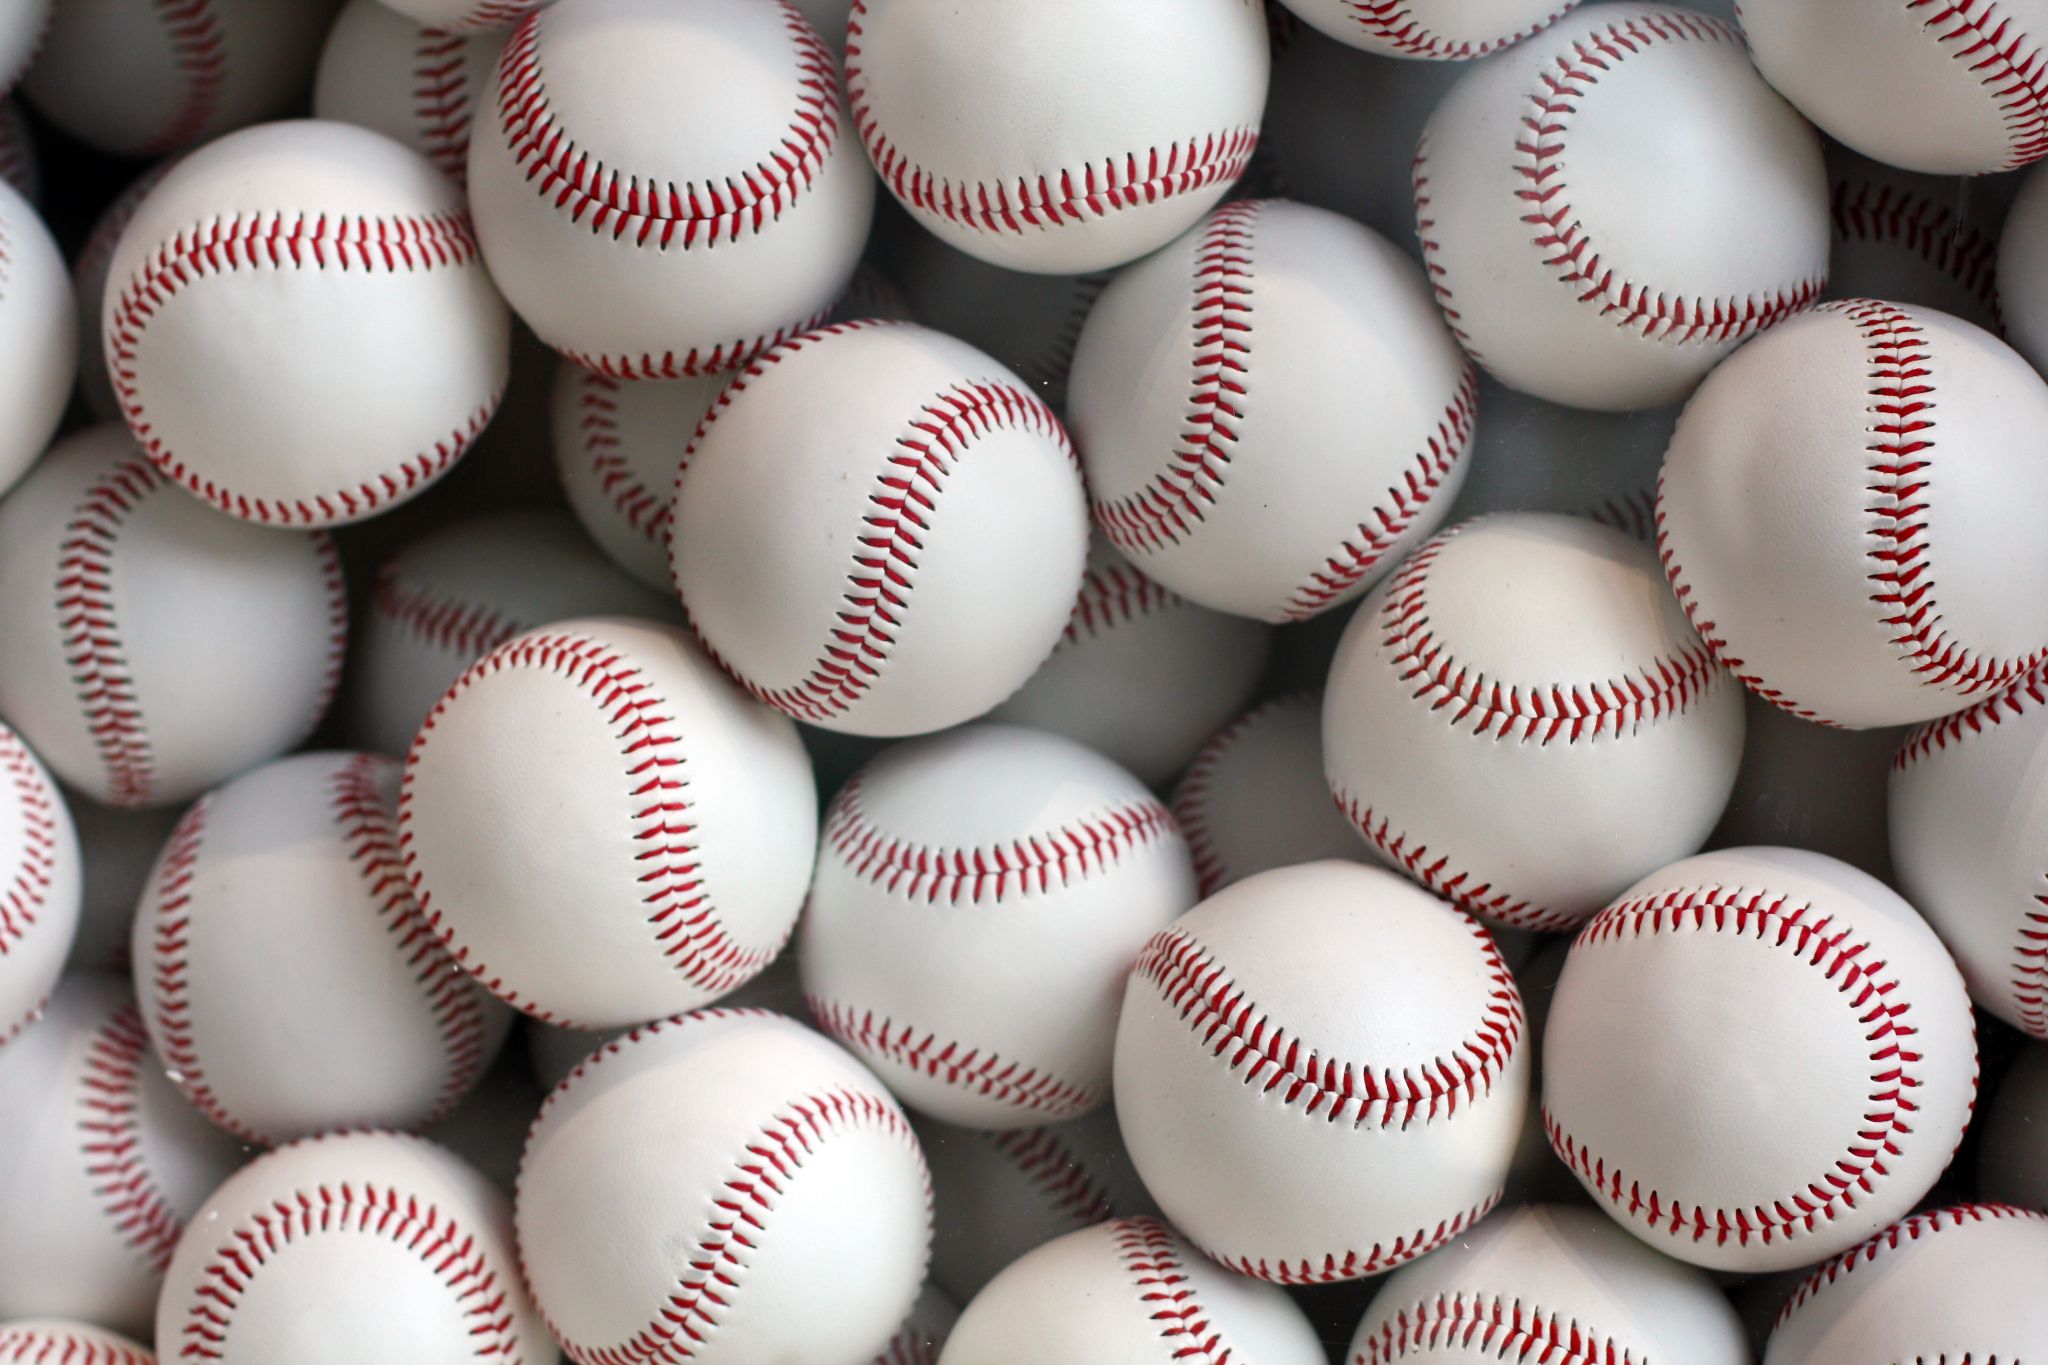 TAPPS state baseball, softball tournament schedule